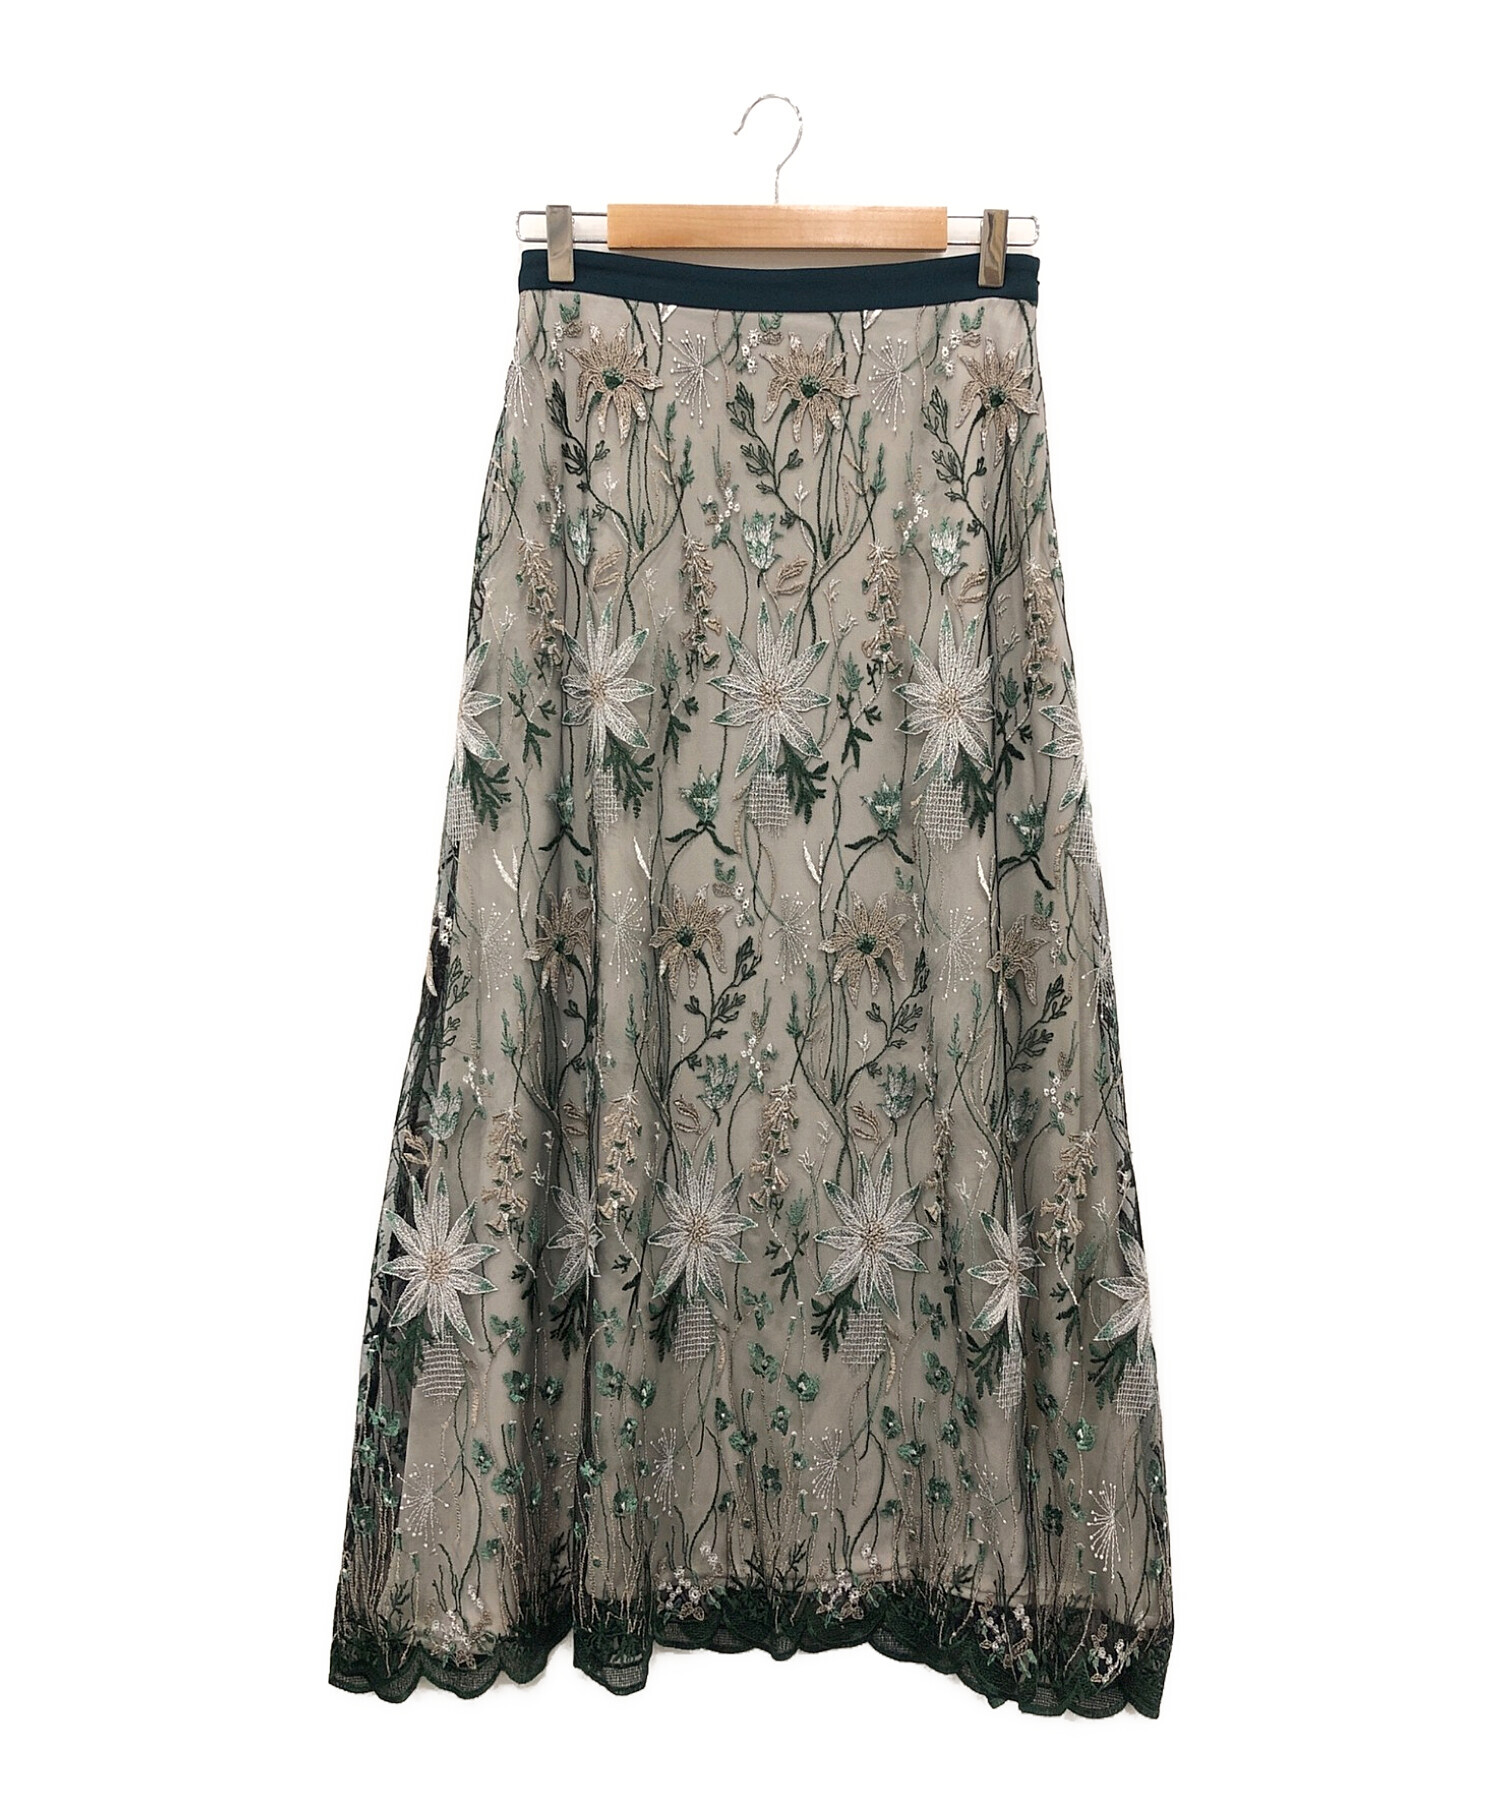 MURRAL (ミューラル) Everlasting embroidery lace skirt グリーン サイズ:2